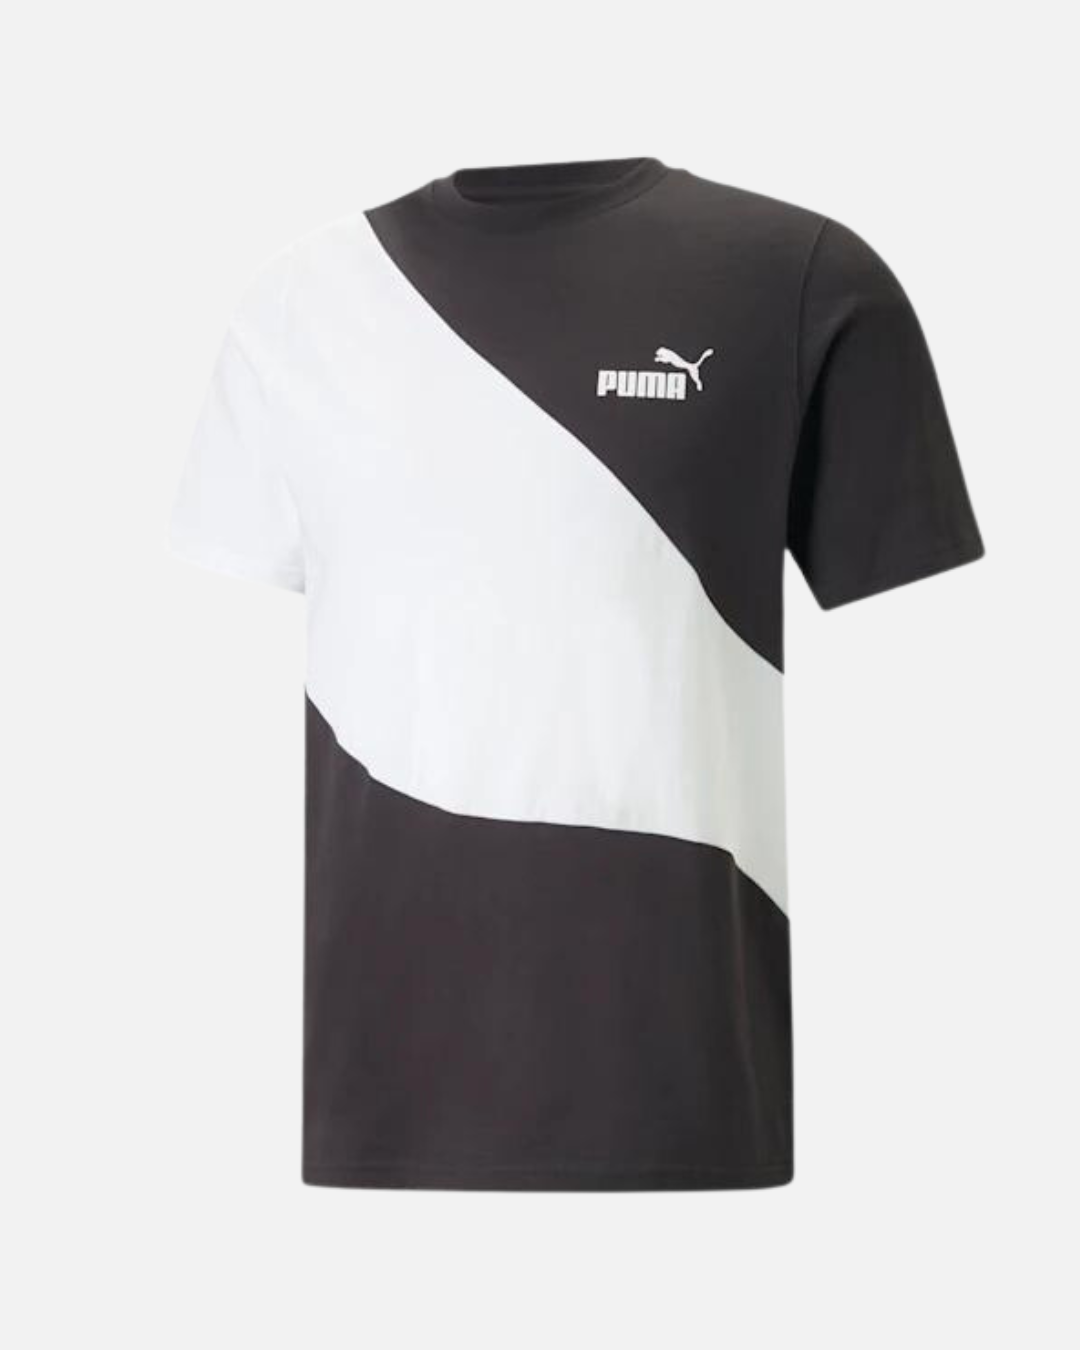 Puma Power T-shirt - Black/White